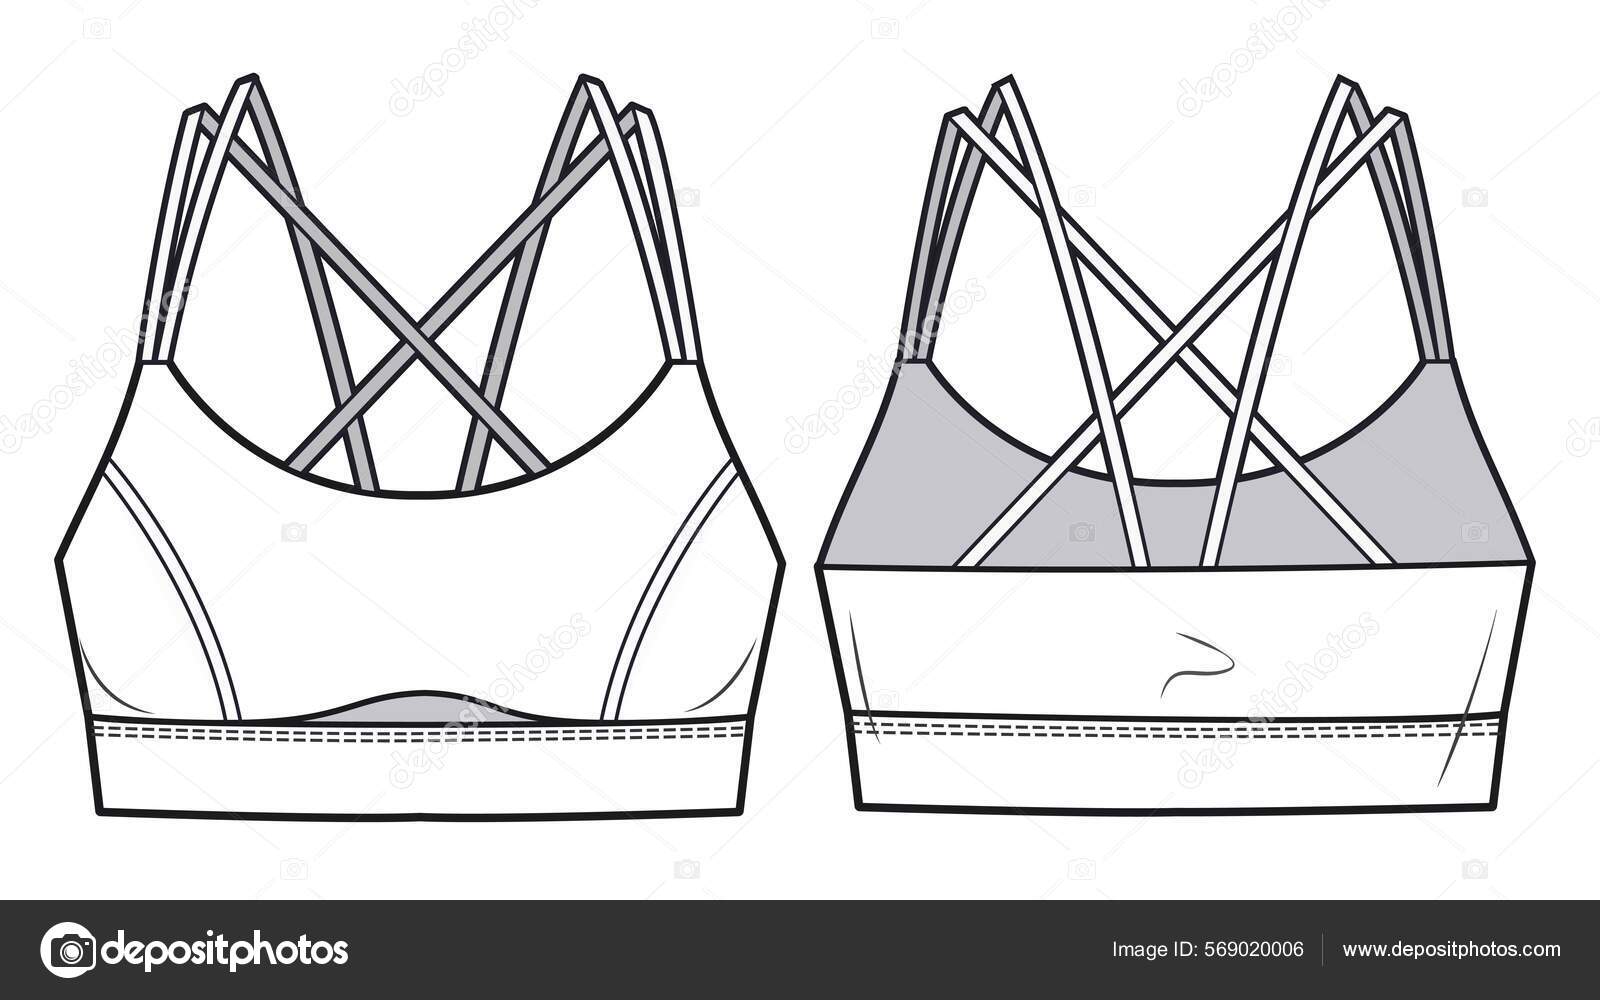 https://st.depositphotos.com/65155874/56902/v/1600/depositphotos_569020006-stock-illustration-girl-sport-bra-fashion-flat.jpg